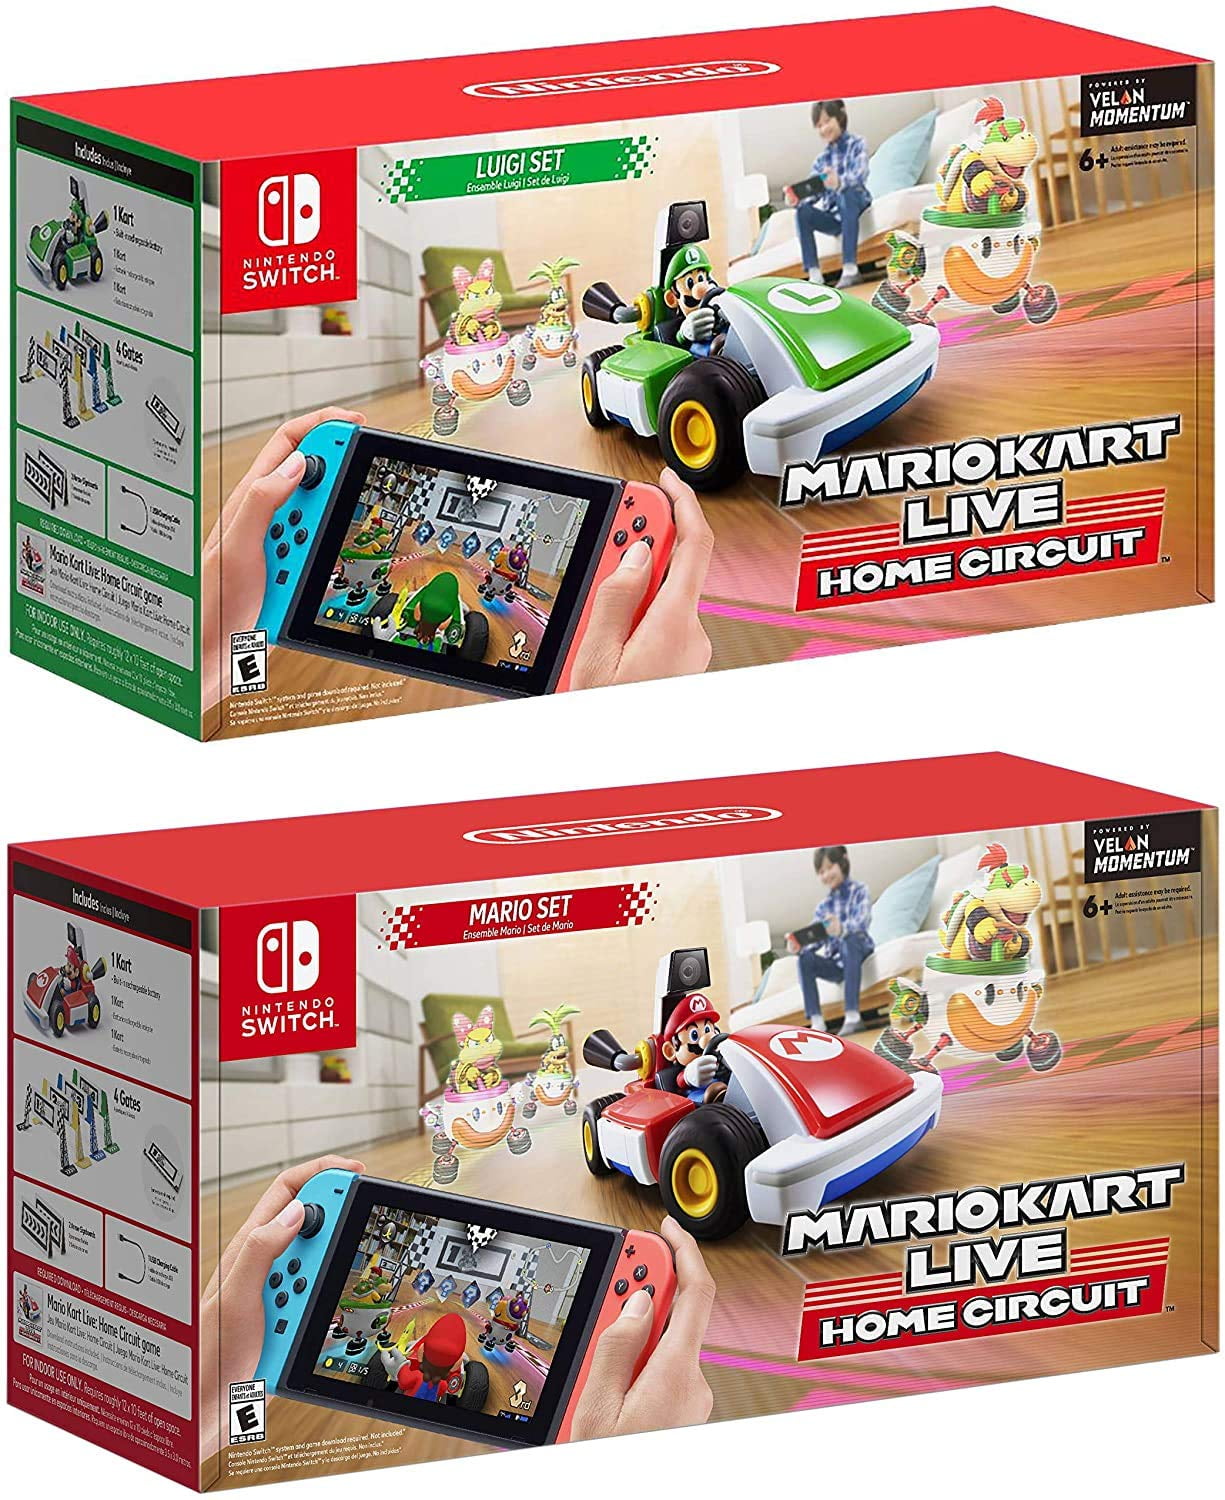 Infectious disease Strong wind announcer Nintendo Switch - Mario Kart Live: Home Circuit - Mario Set and Luigi Set  Edition - Holiday Bundle - Walmart.com